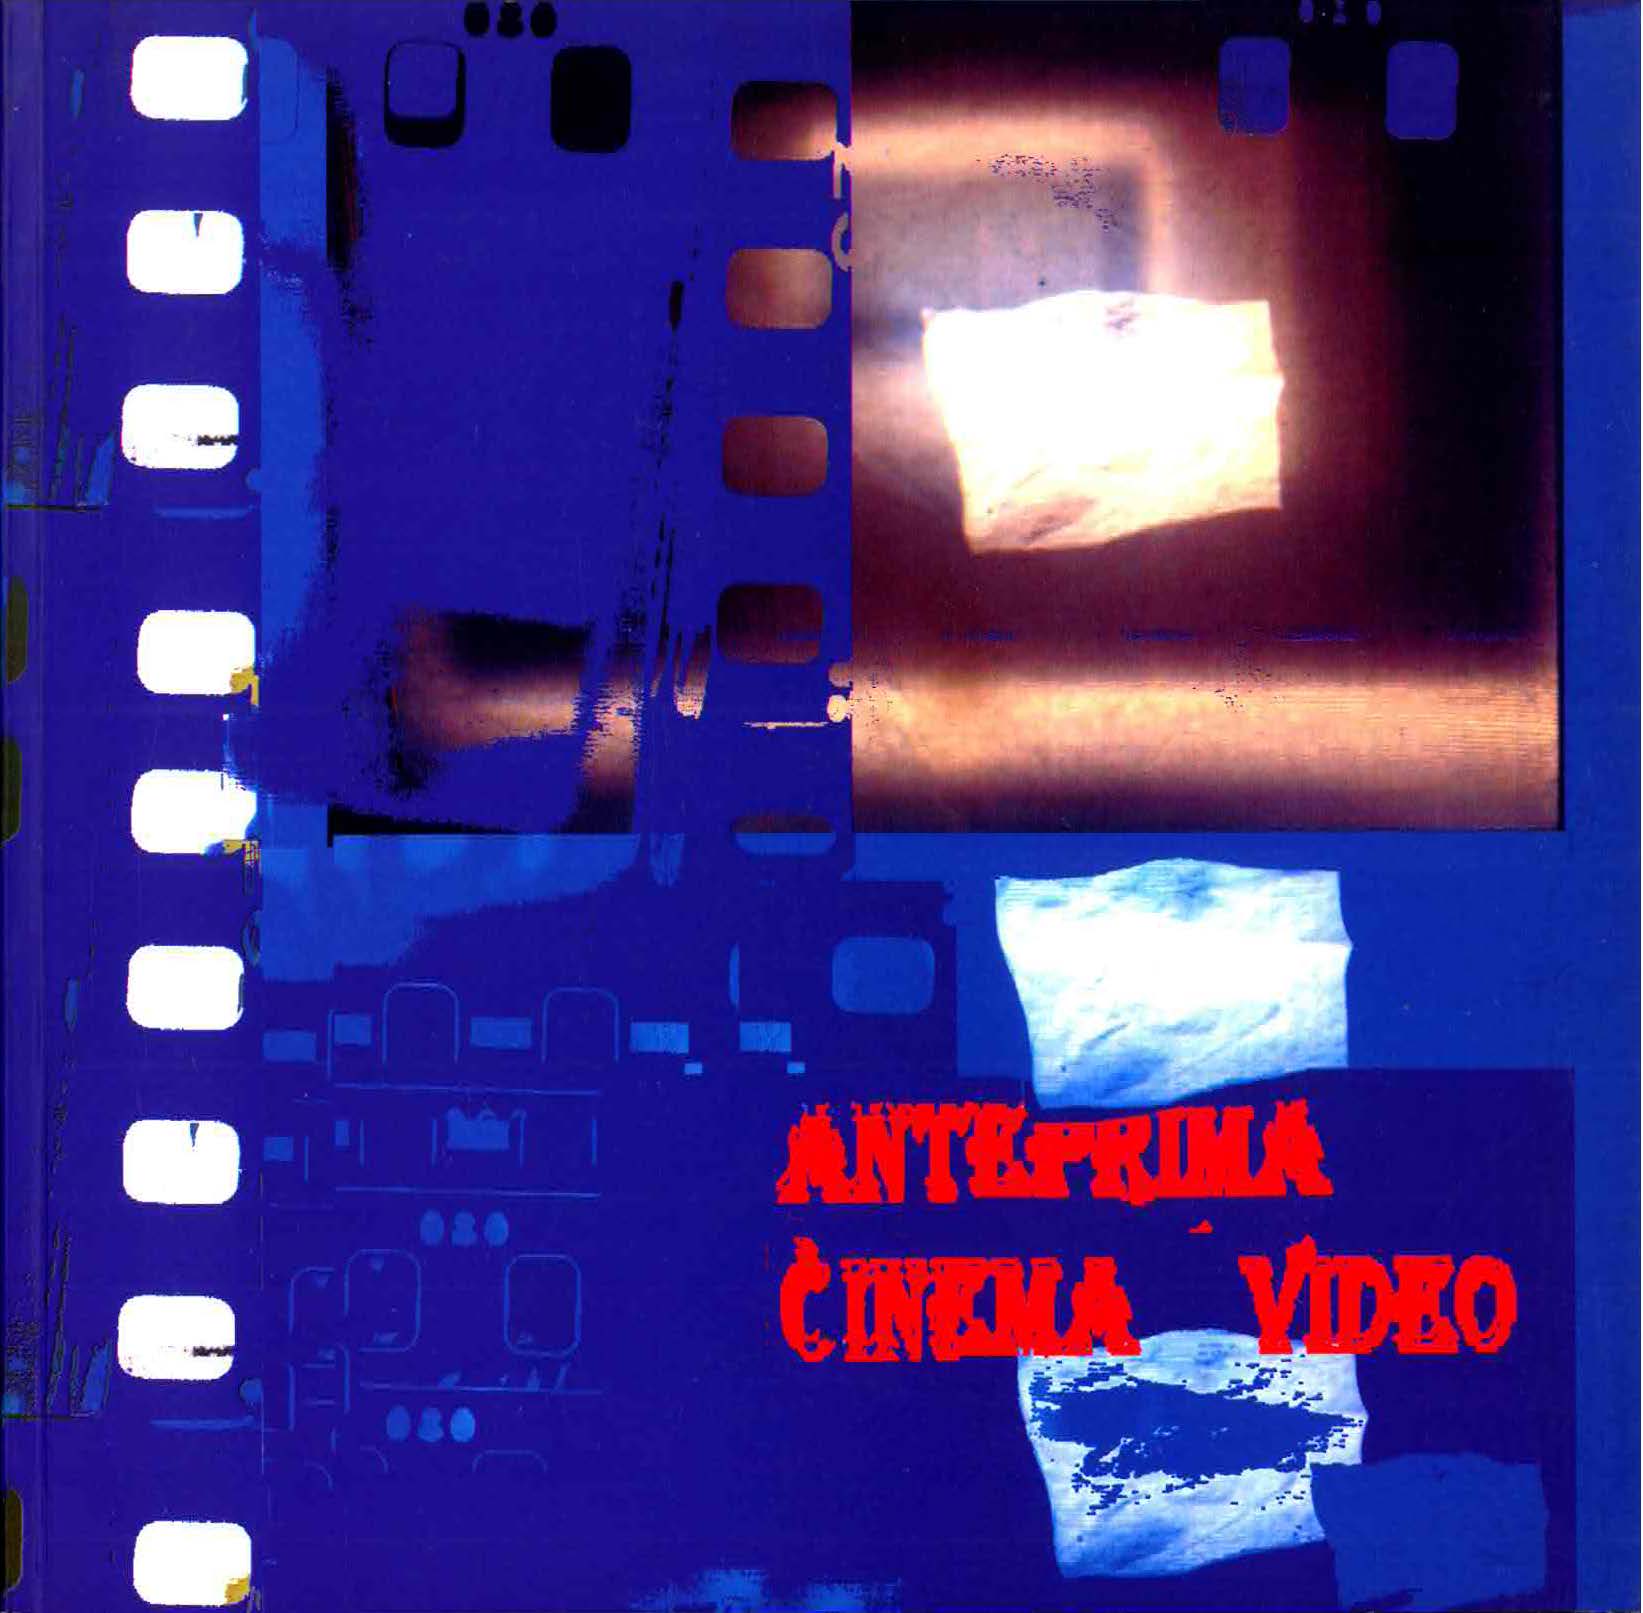 Anteprima Cinema Video (Pre Biennial Event)